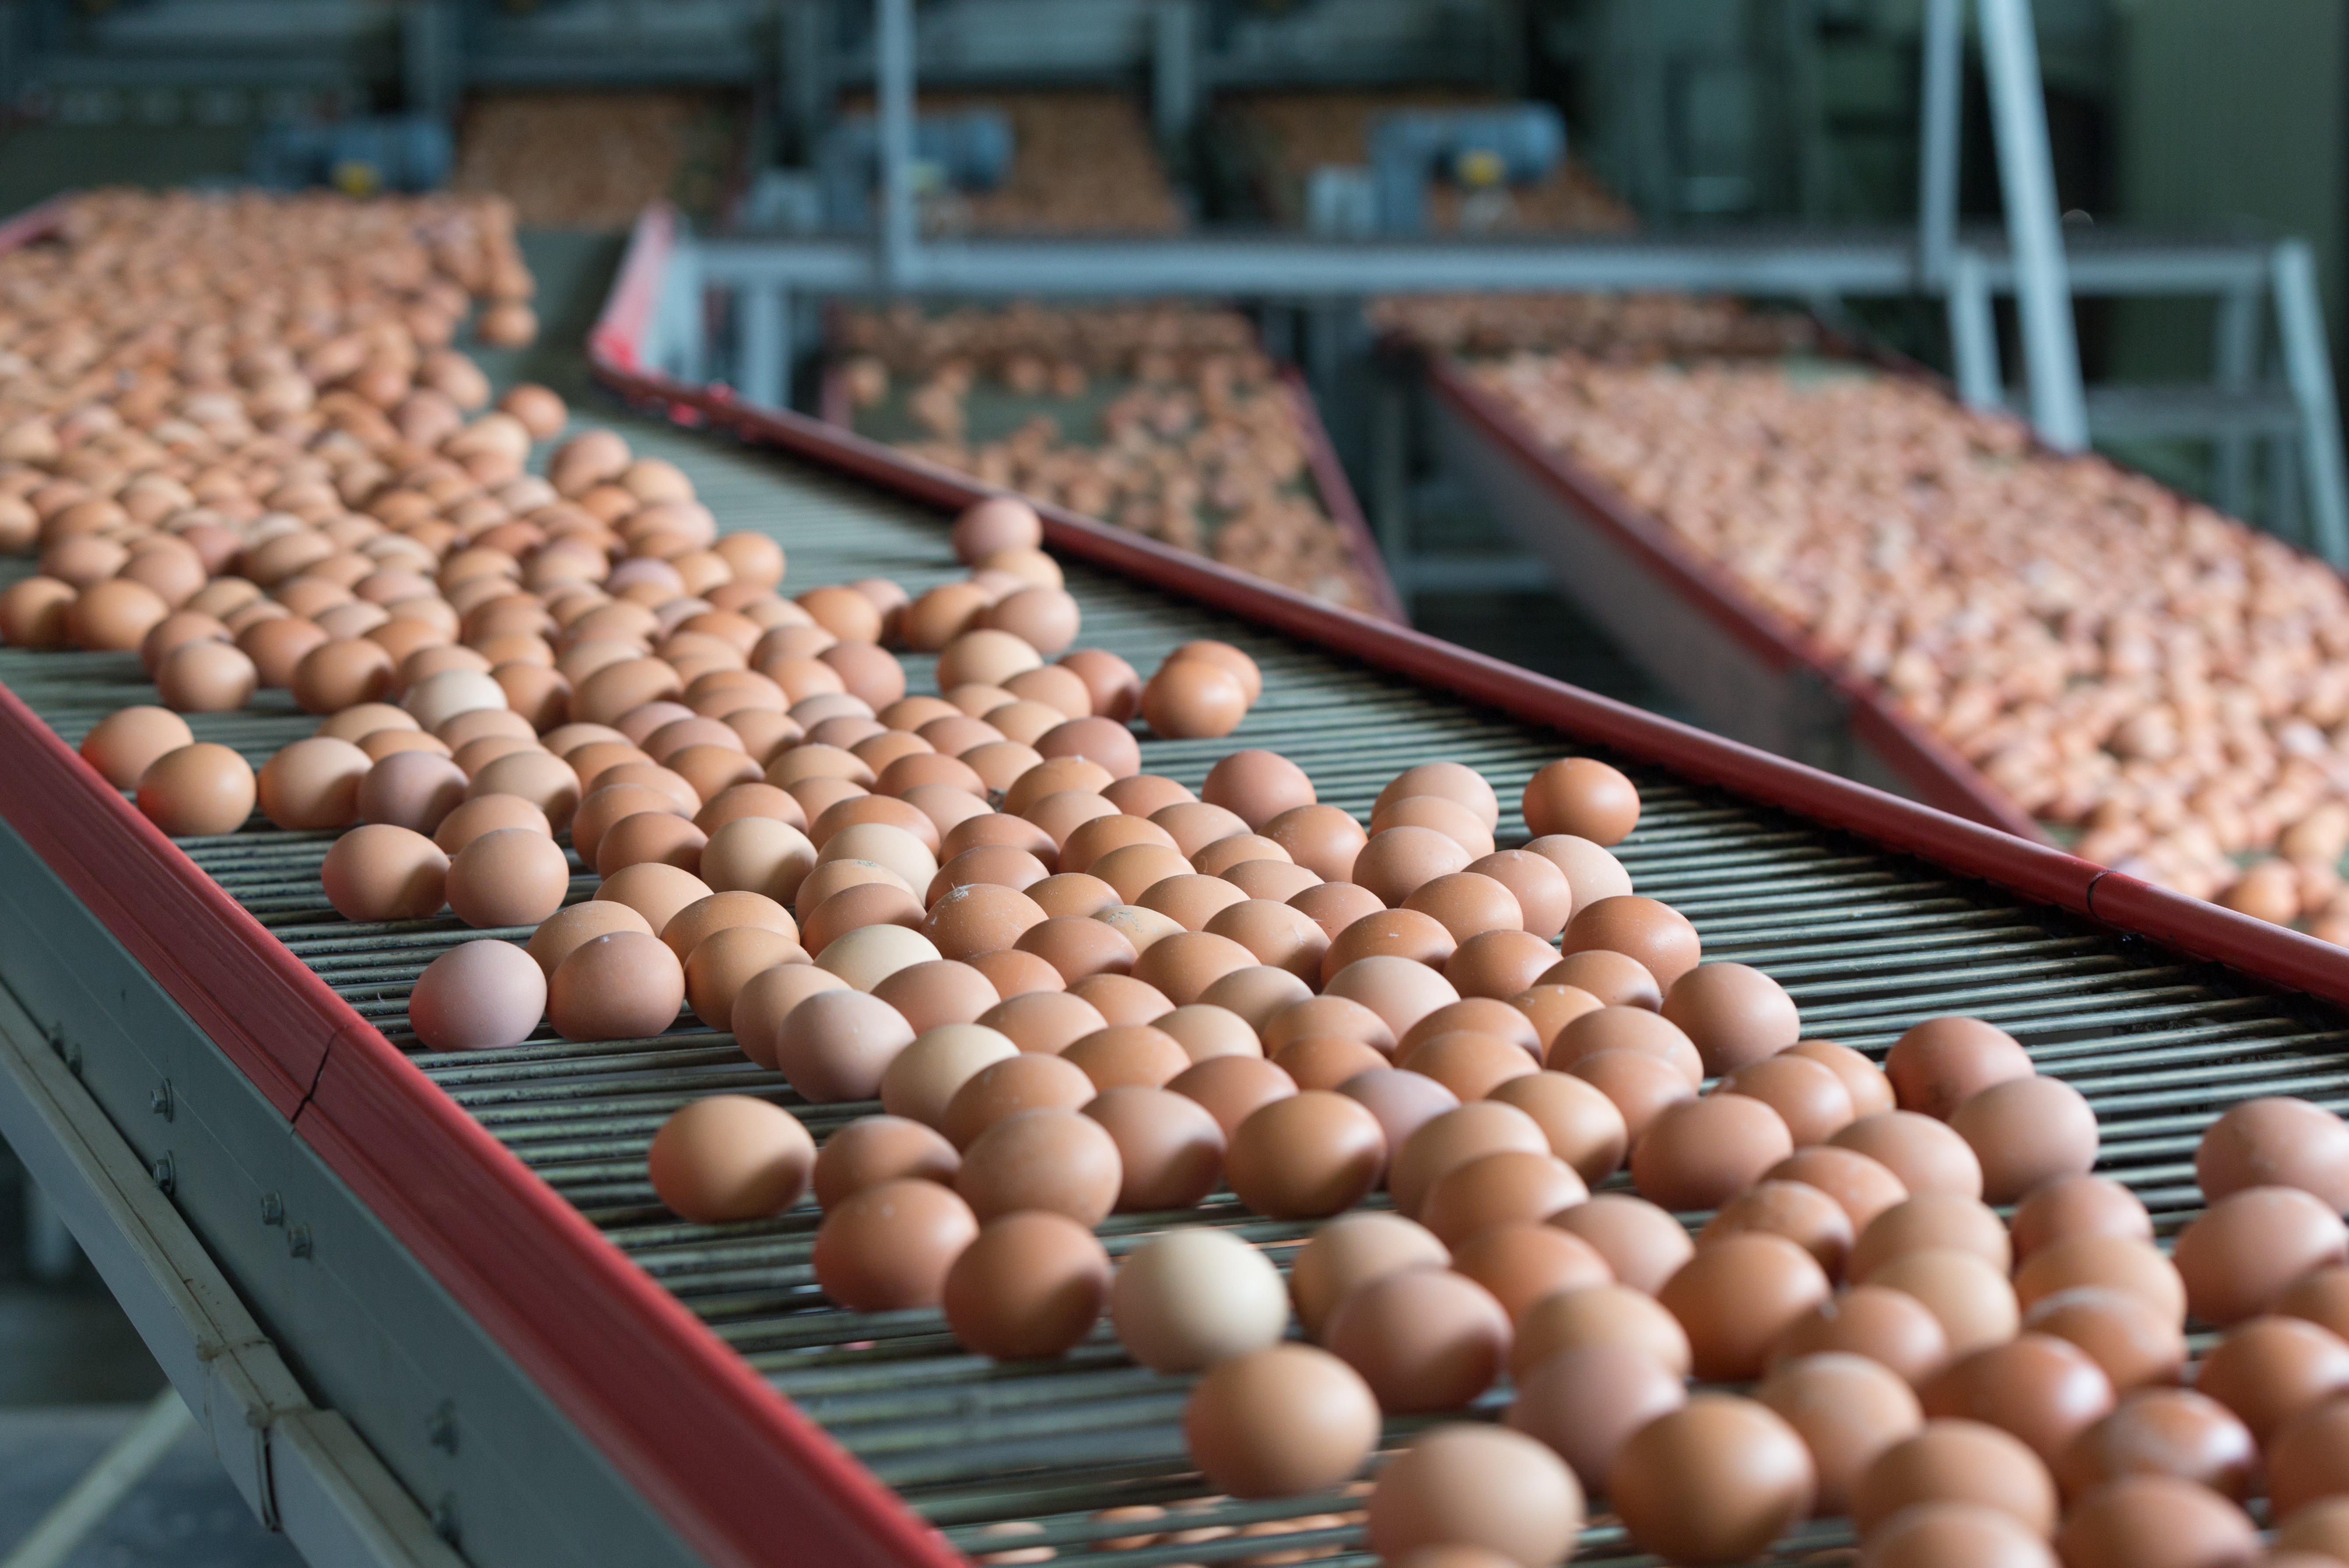 hundreds of eggs on a conveyer belt